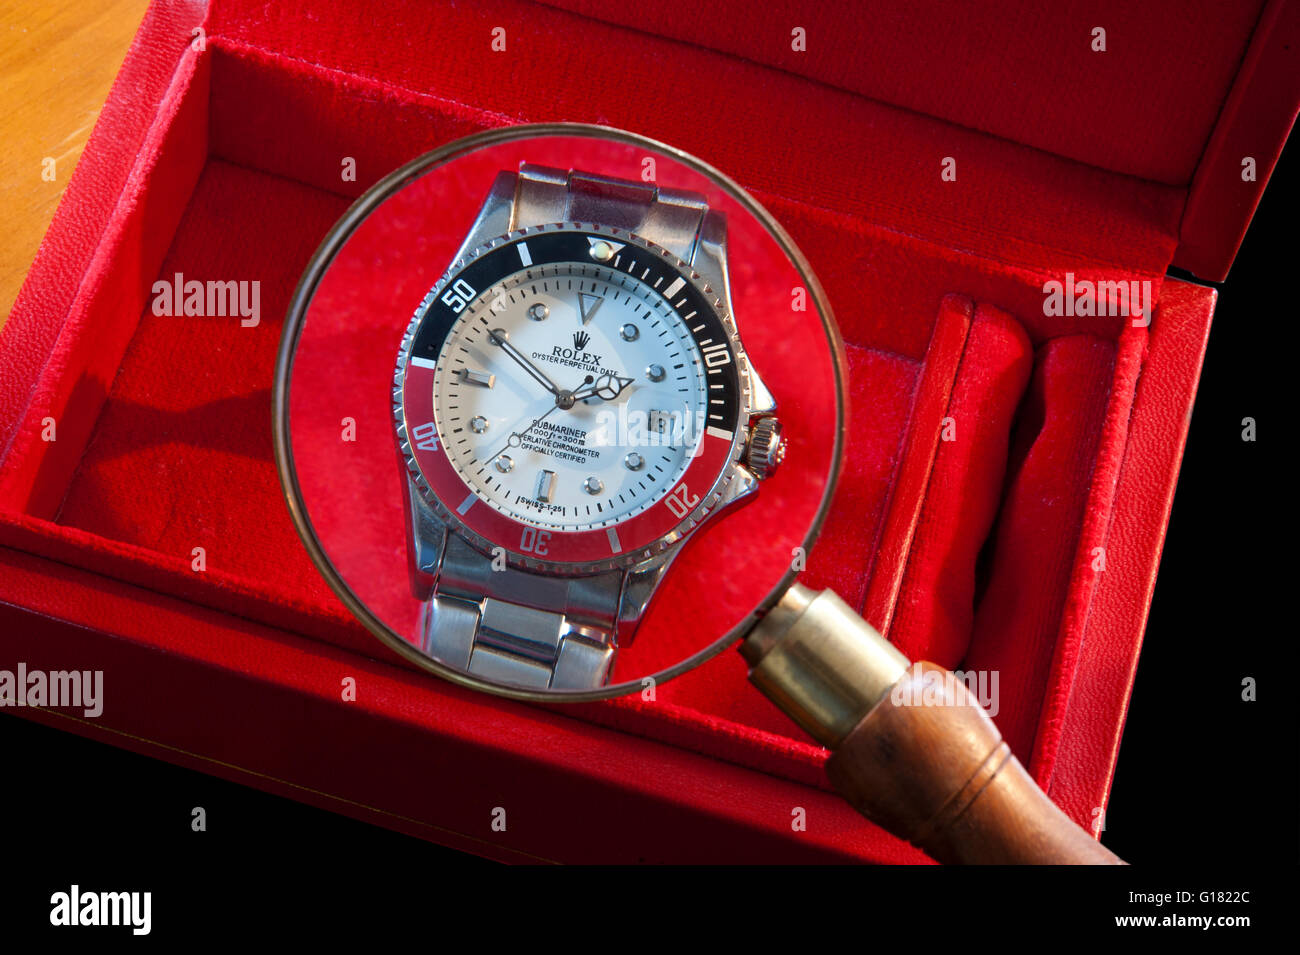 Rolex Day-Date la mejor calidad réplicas relojes 4801 – : replicas  relojes suizos, rolex imitacion españa, relojes falsos de lujo venta